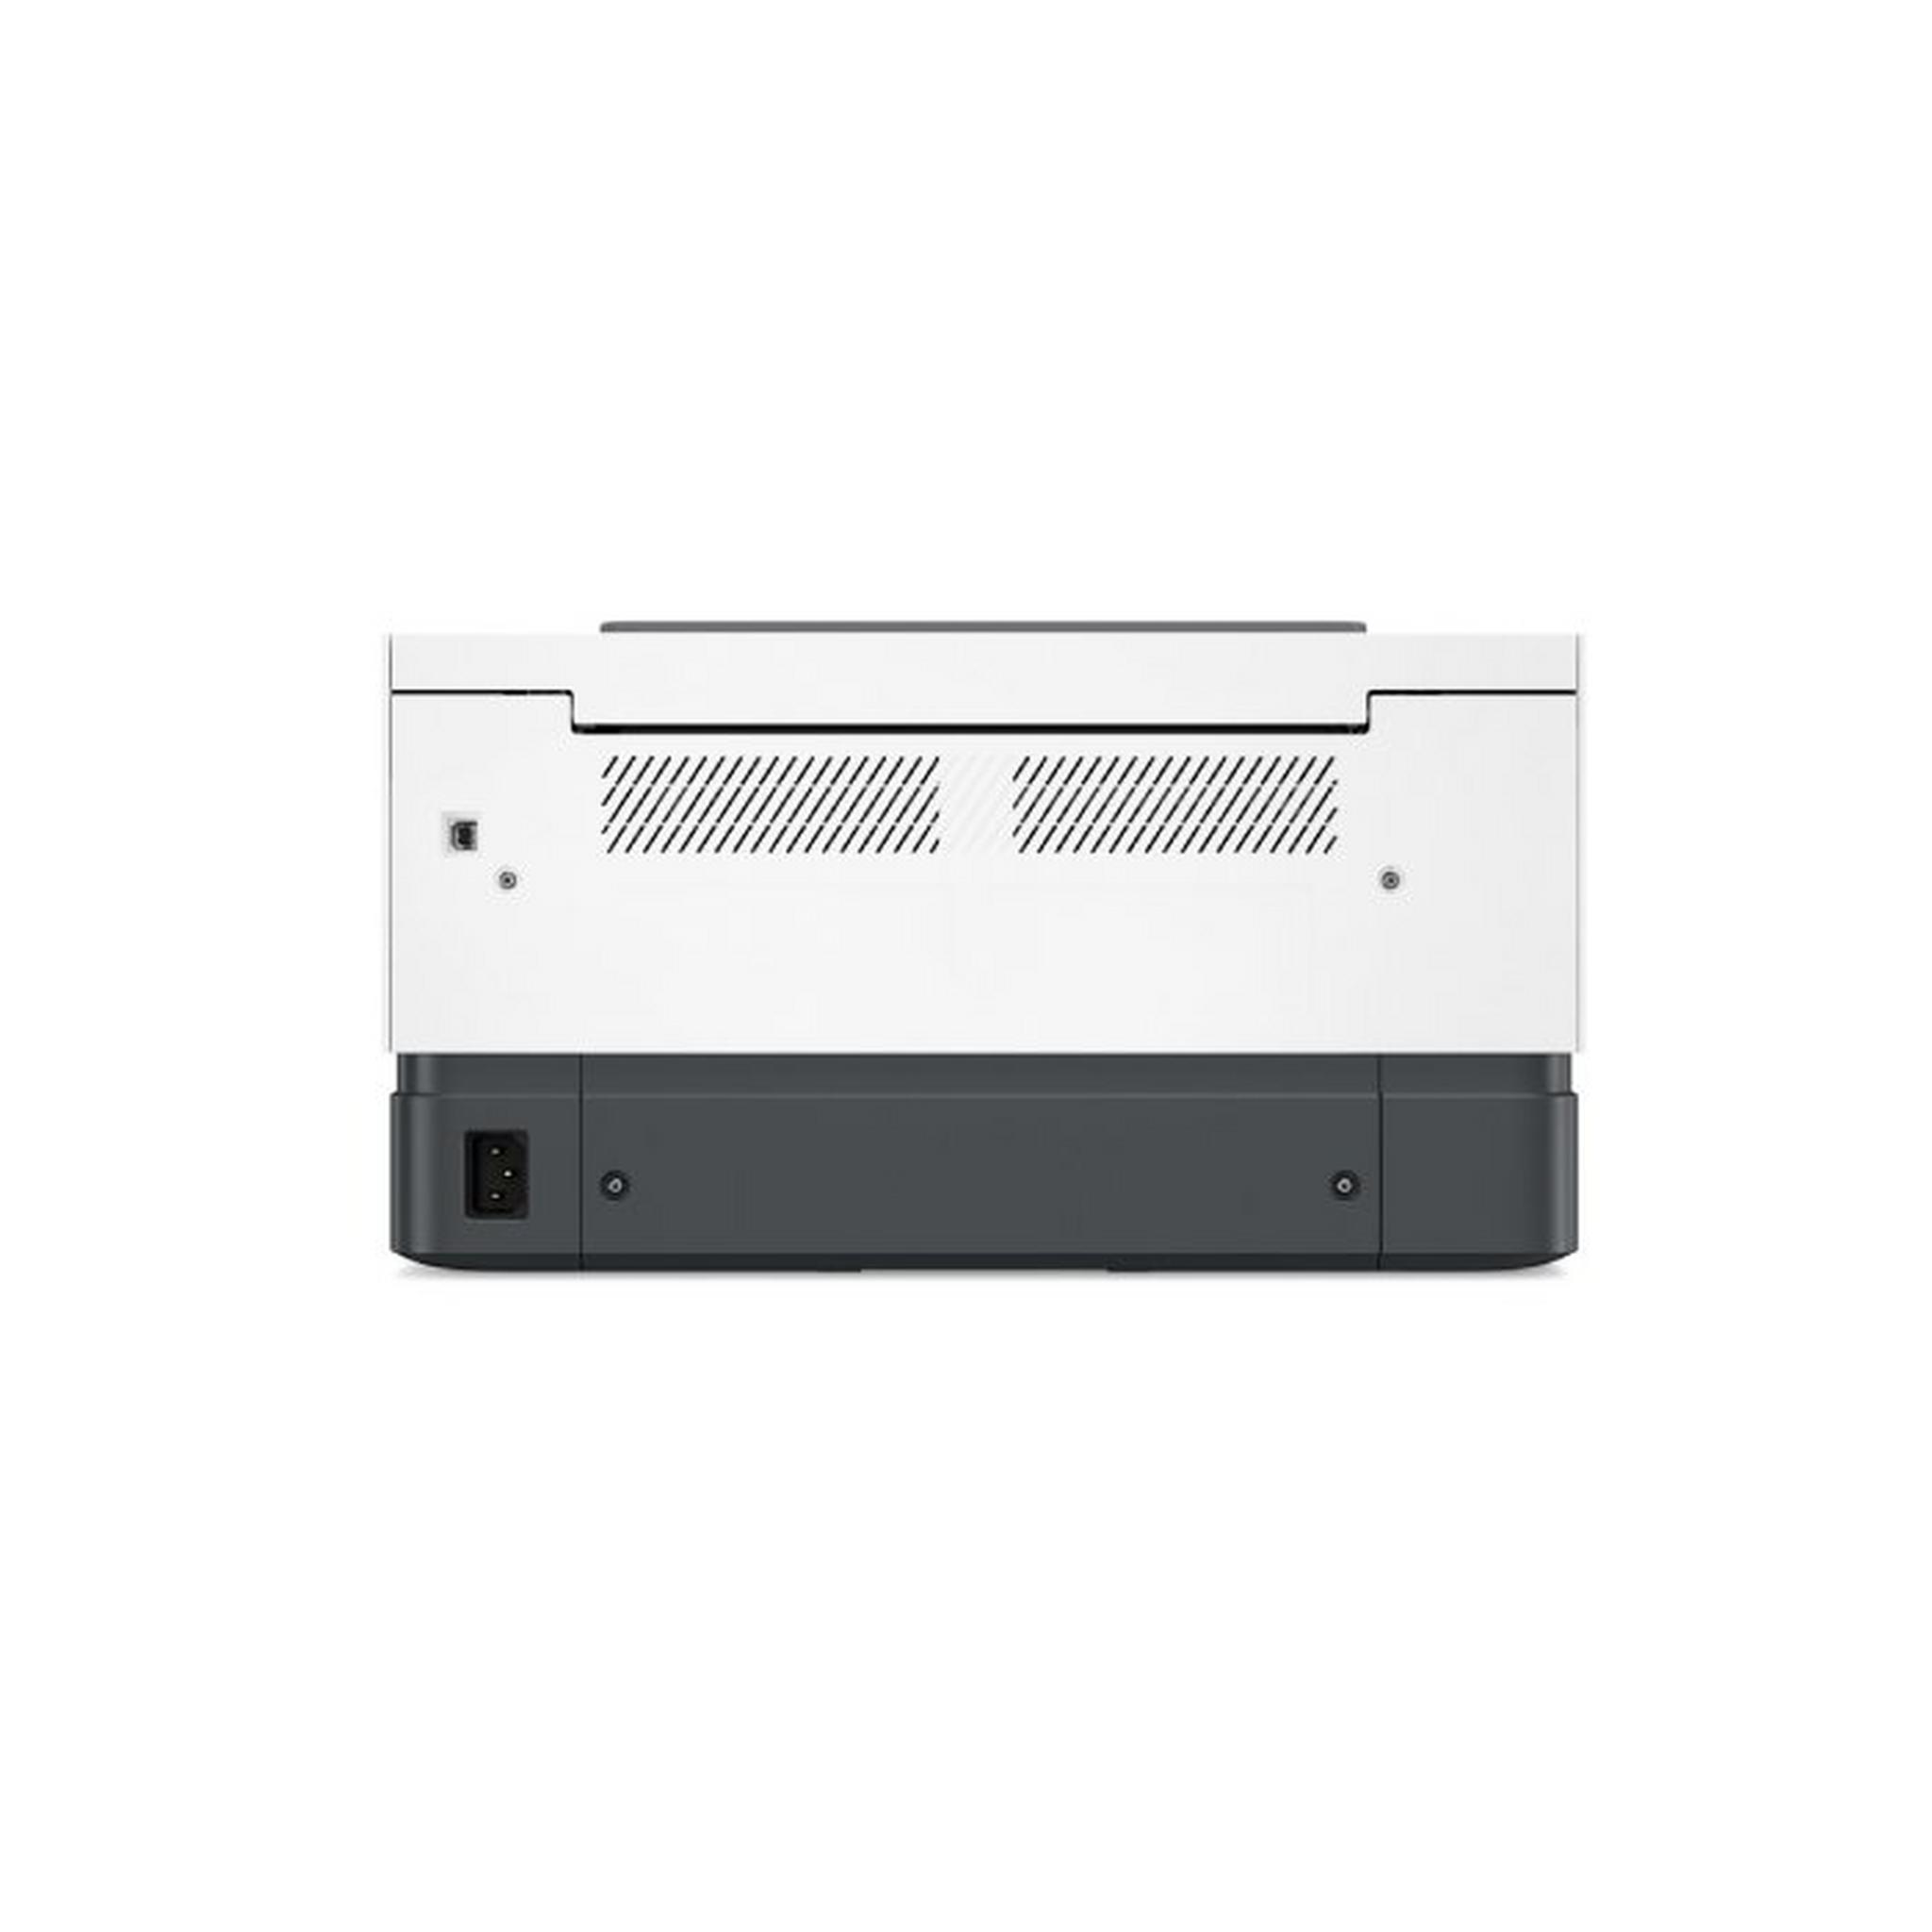 HP Neverstop 1000W Laser  Printer - (4RY23A)